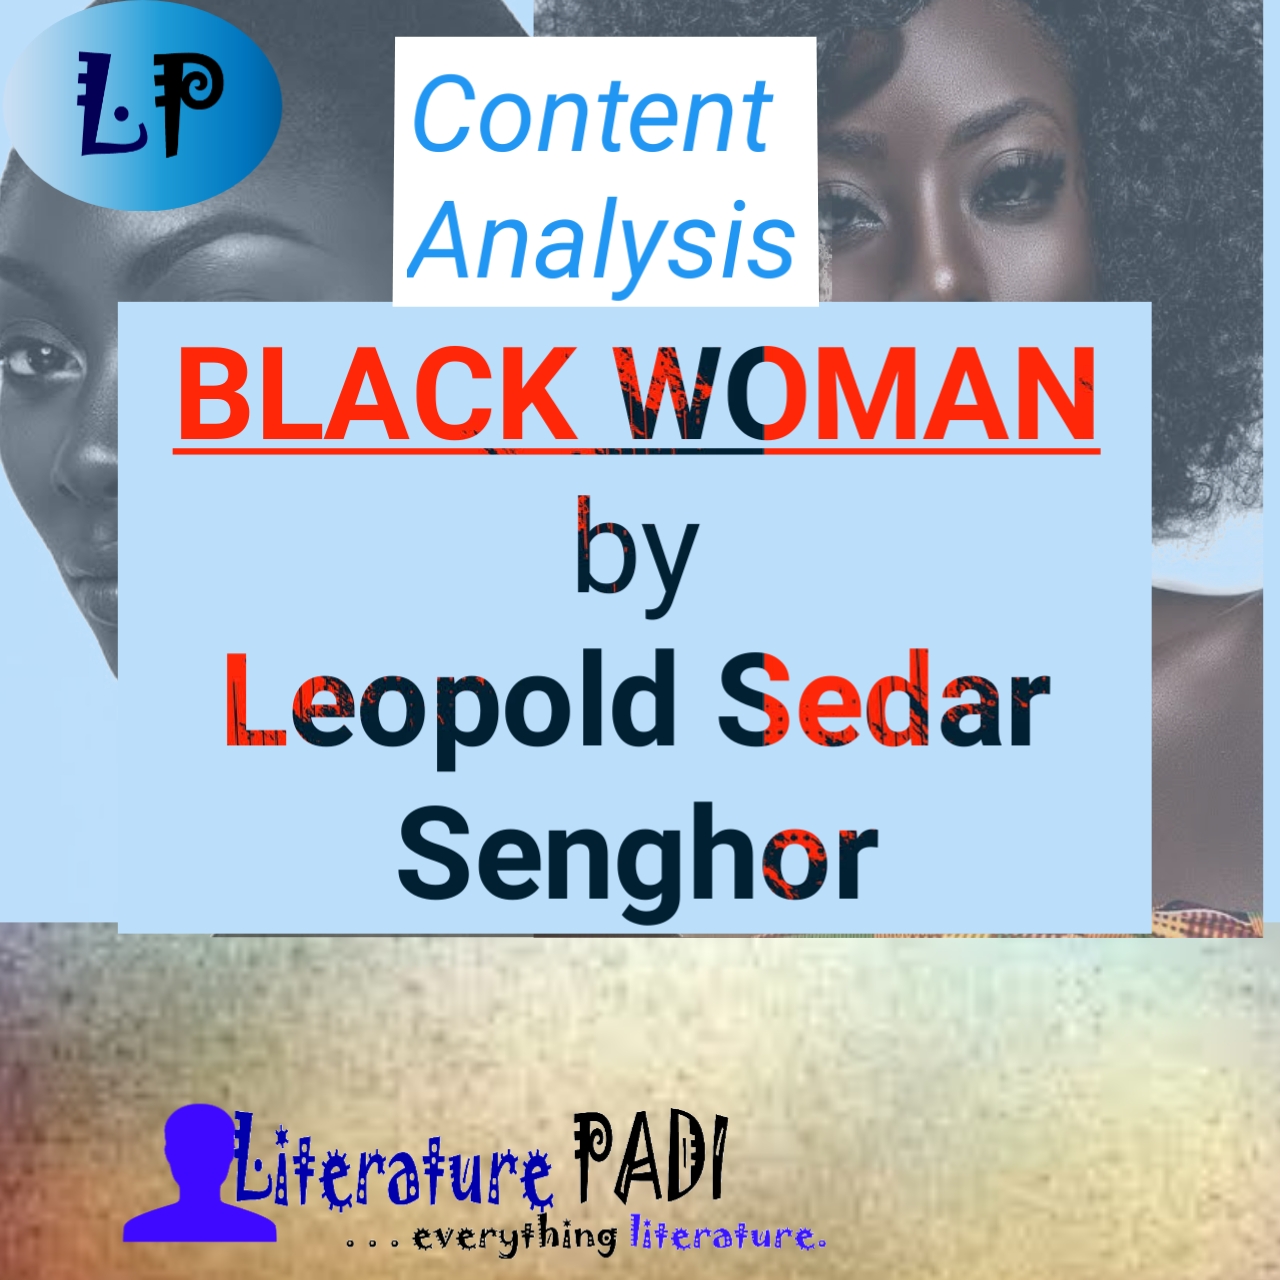 Content Analysis of Leopold Sedar Senghor’s BLACK WOMAN